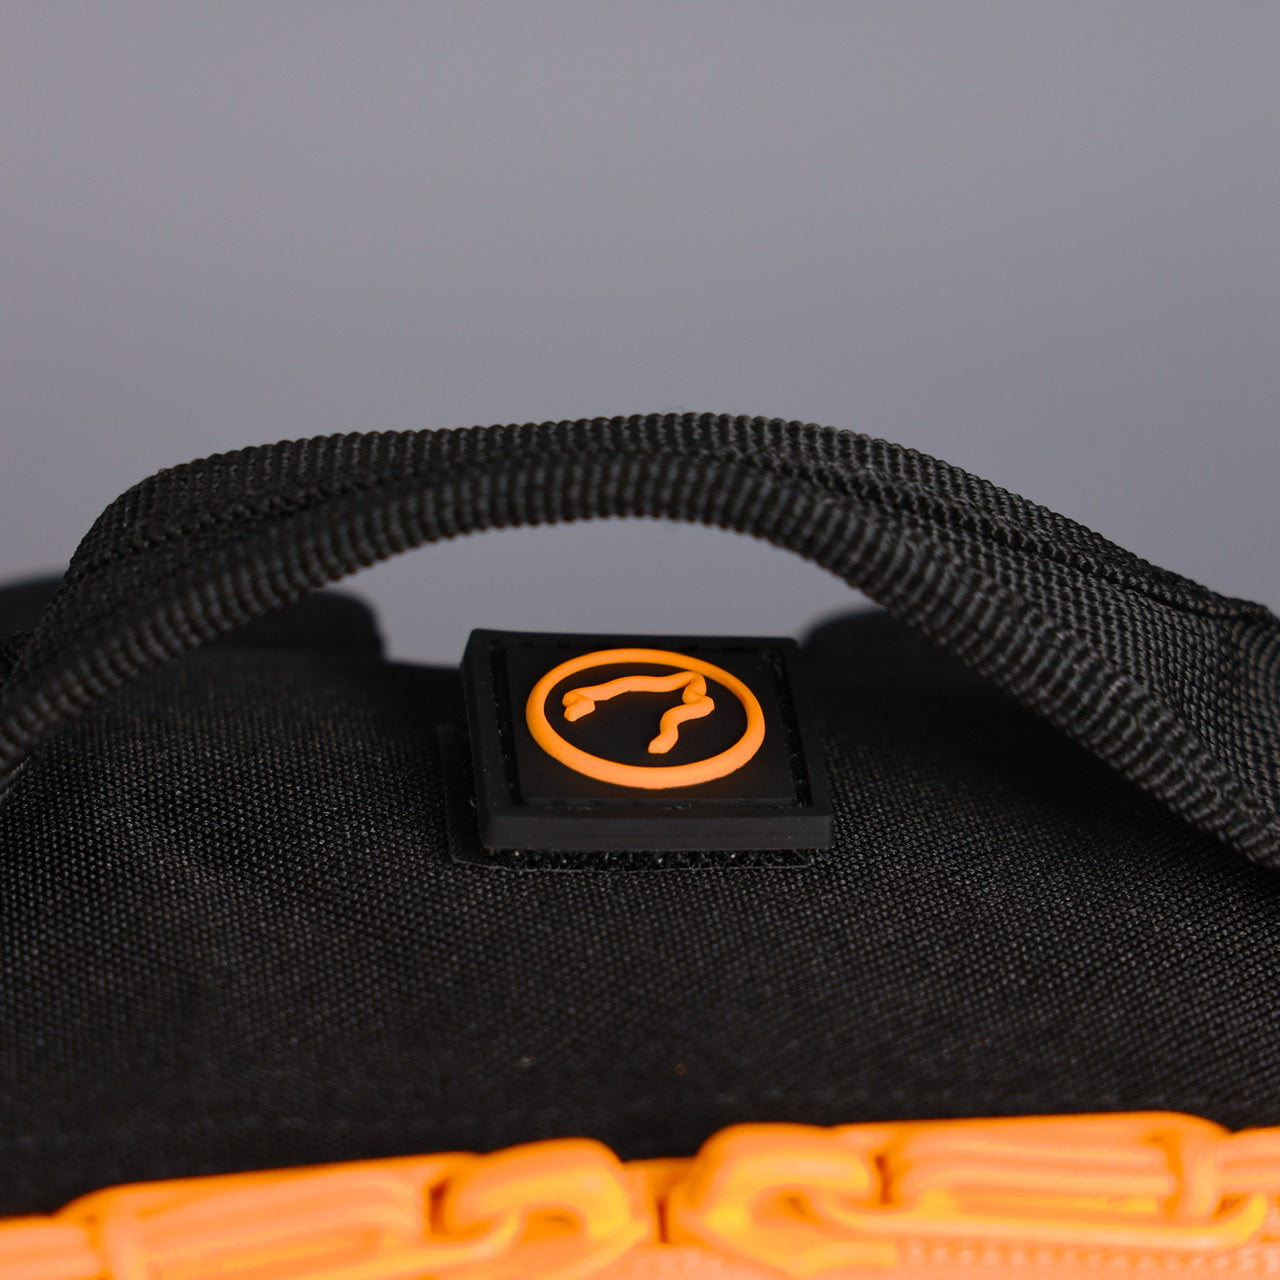 9L Backpack Mini Black Neon Orange